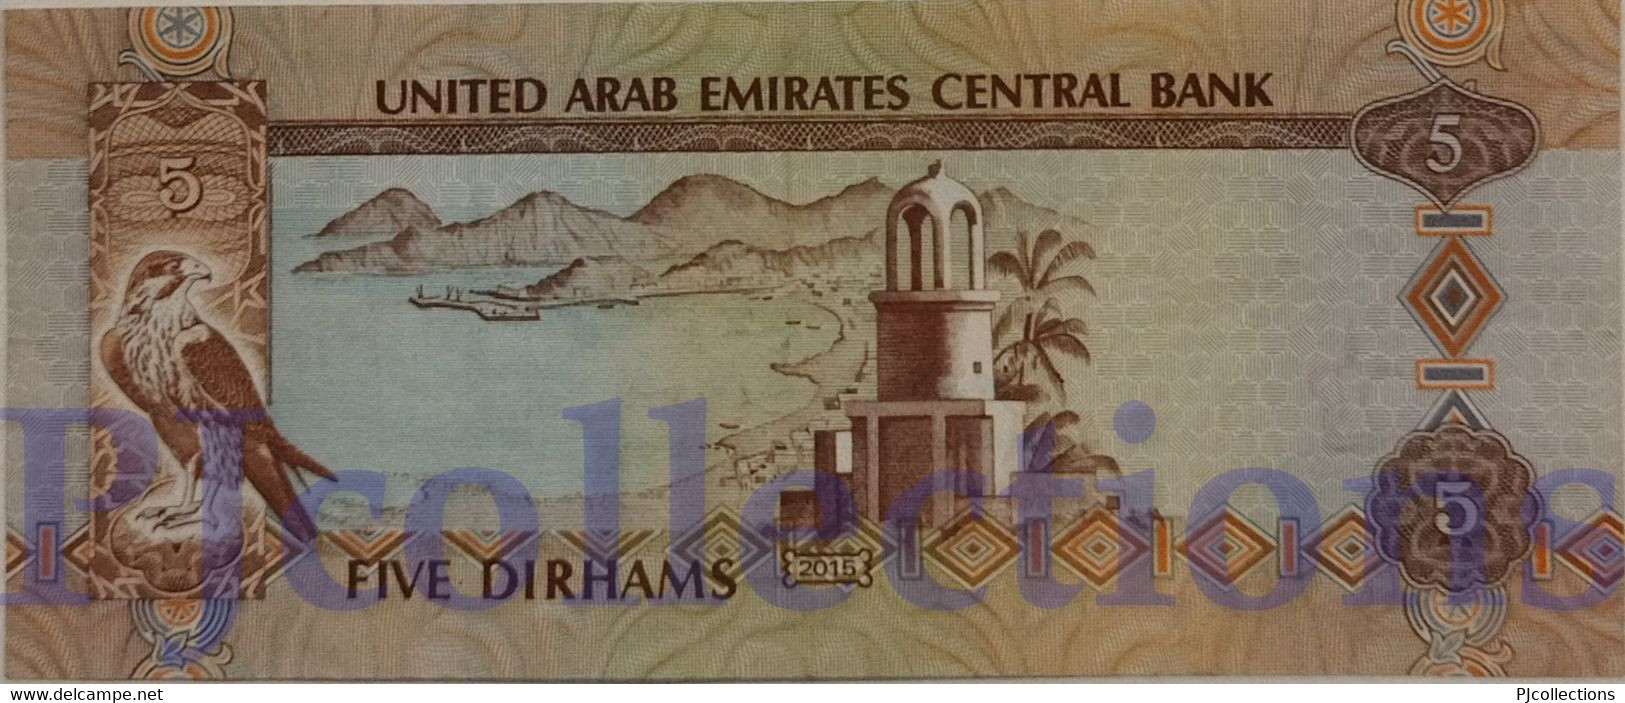 UNITED ARAB EMIRATES 5 DIRHAMS 2015 PICK 26c XF - Emirats Arabes Unis